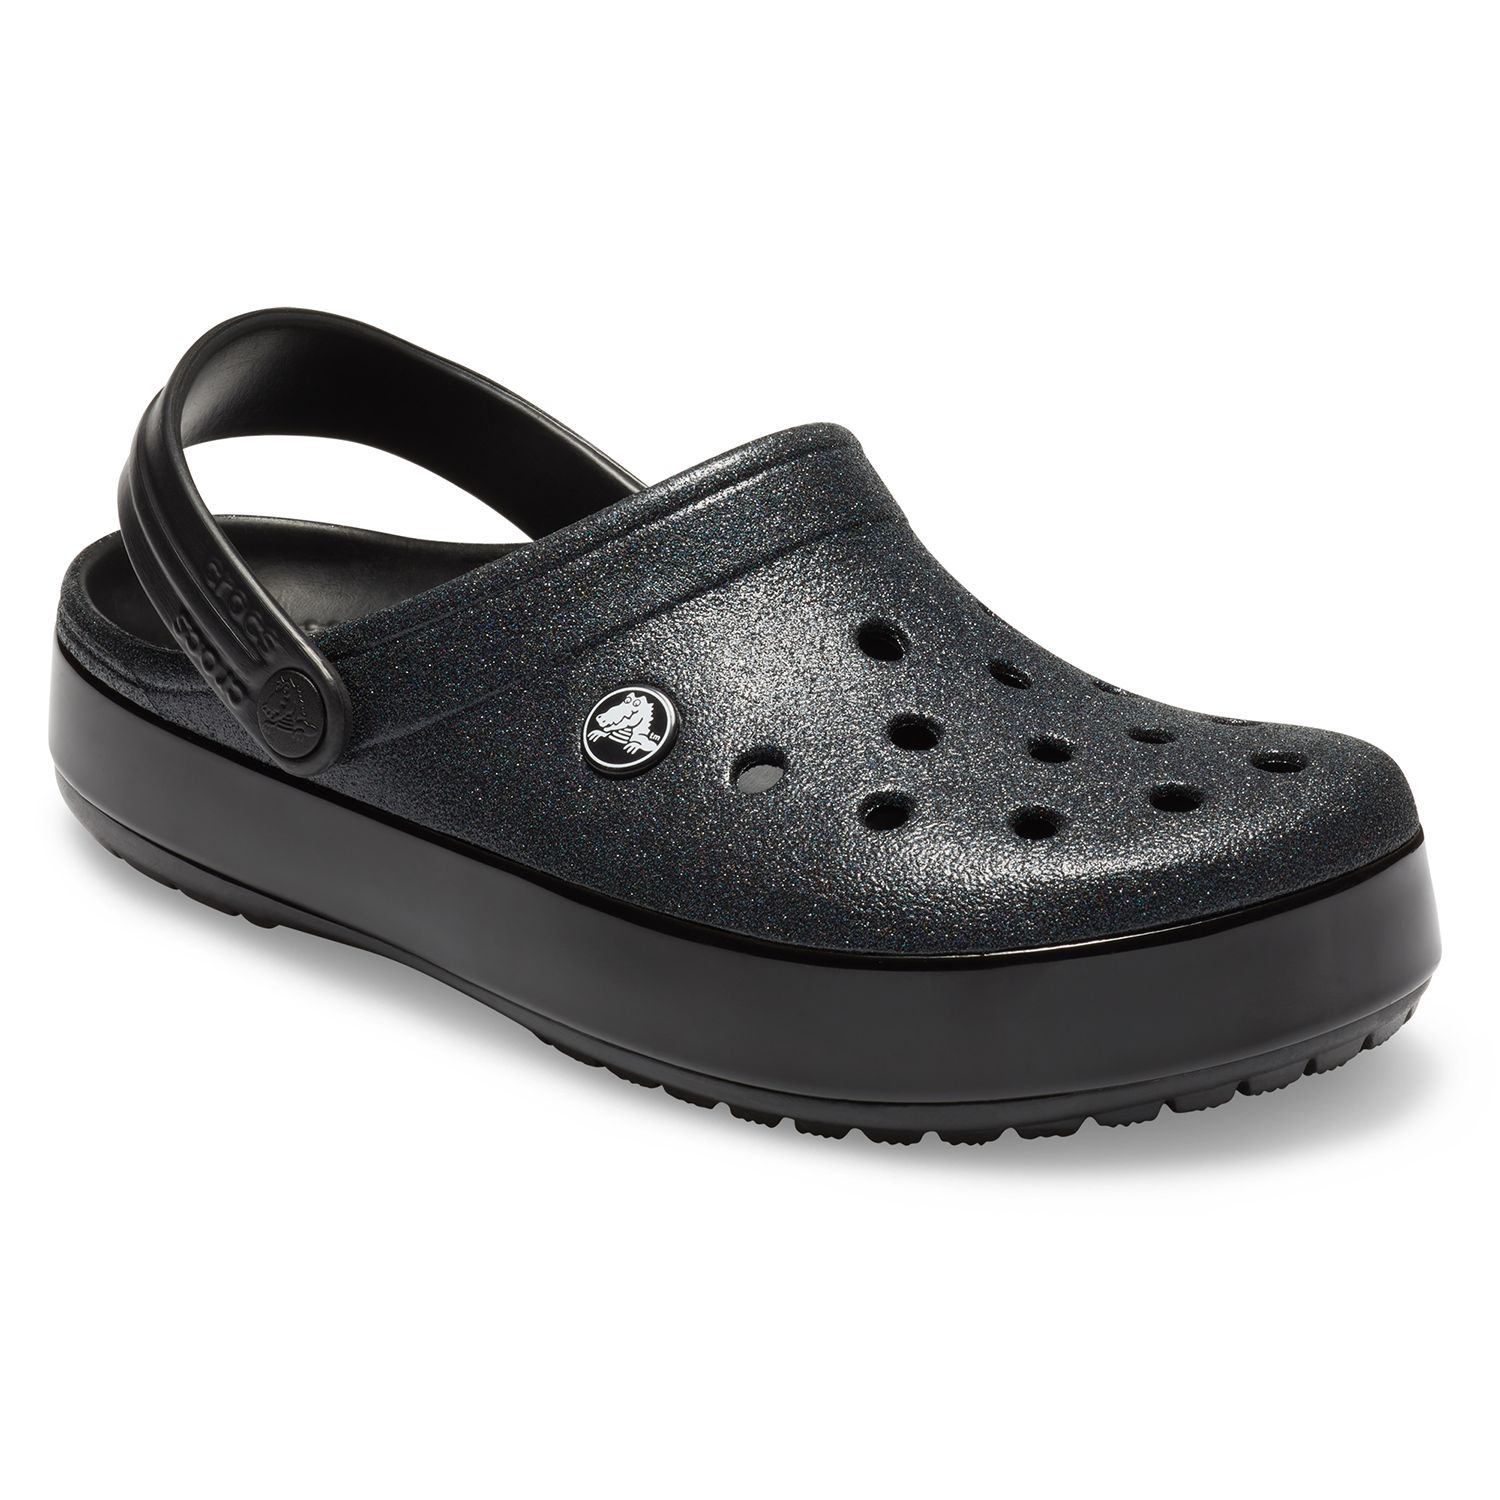 shoes crocs women